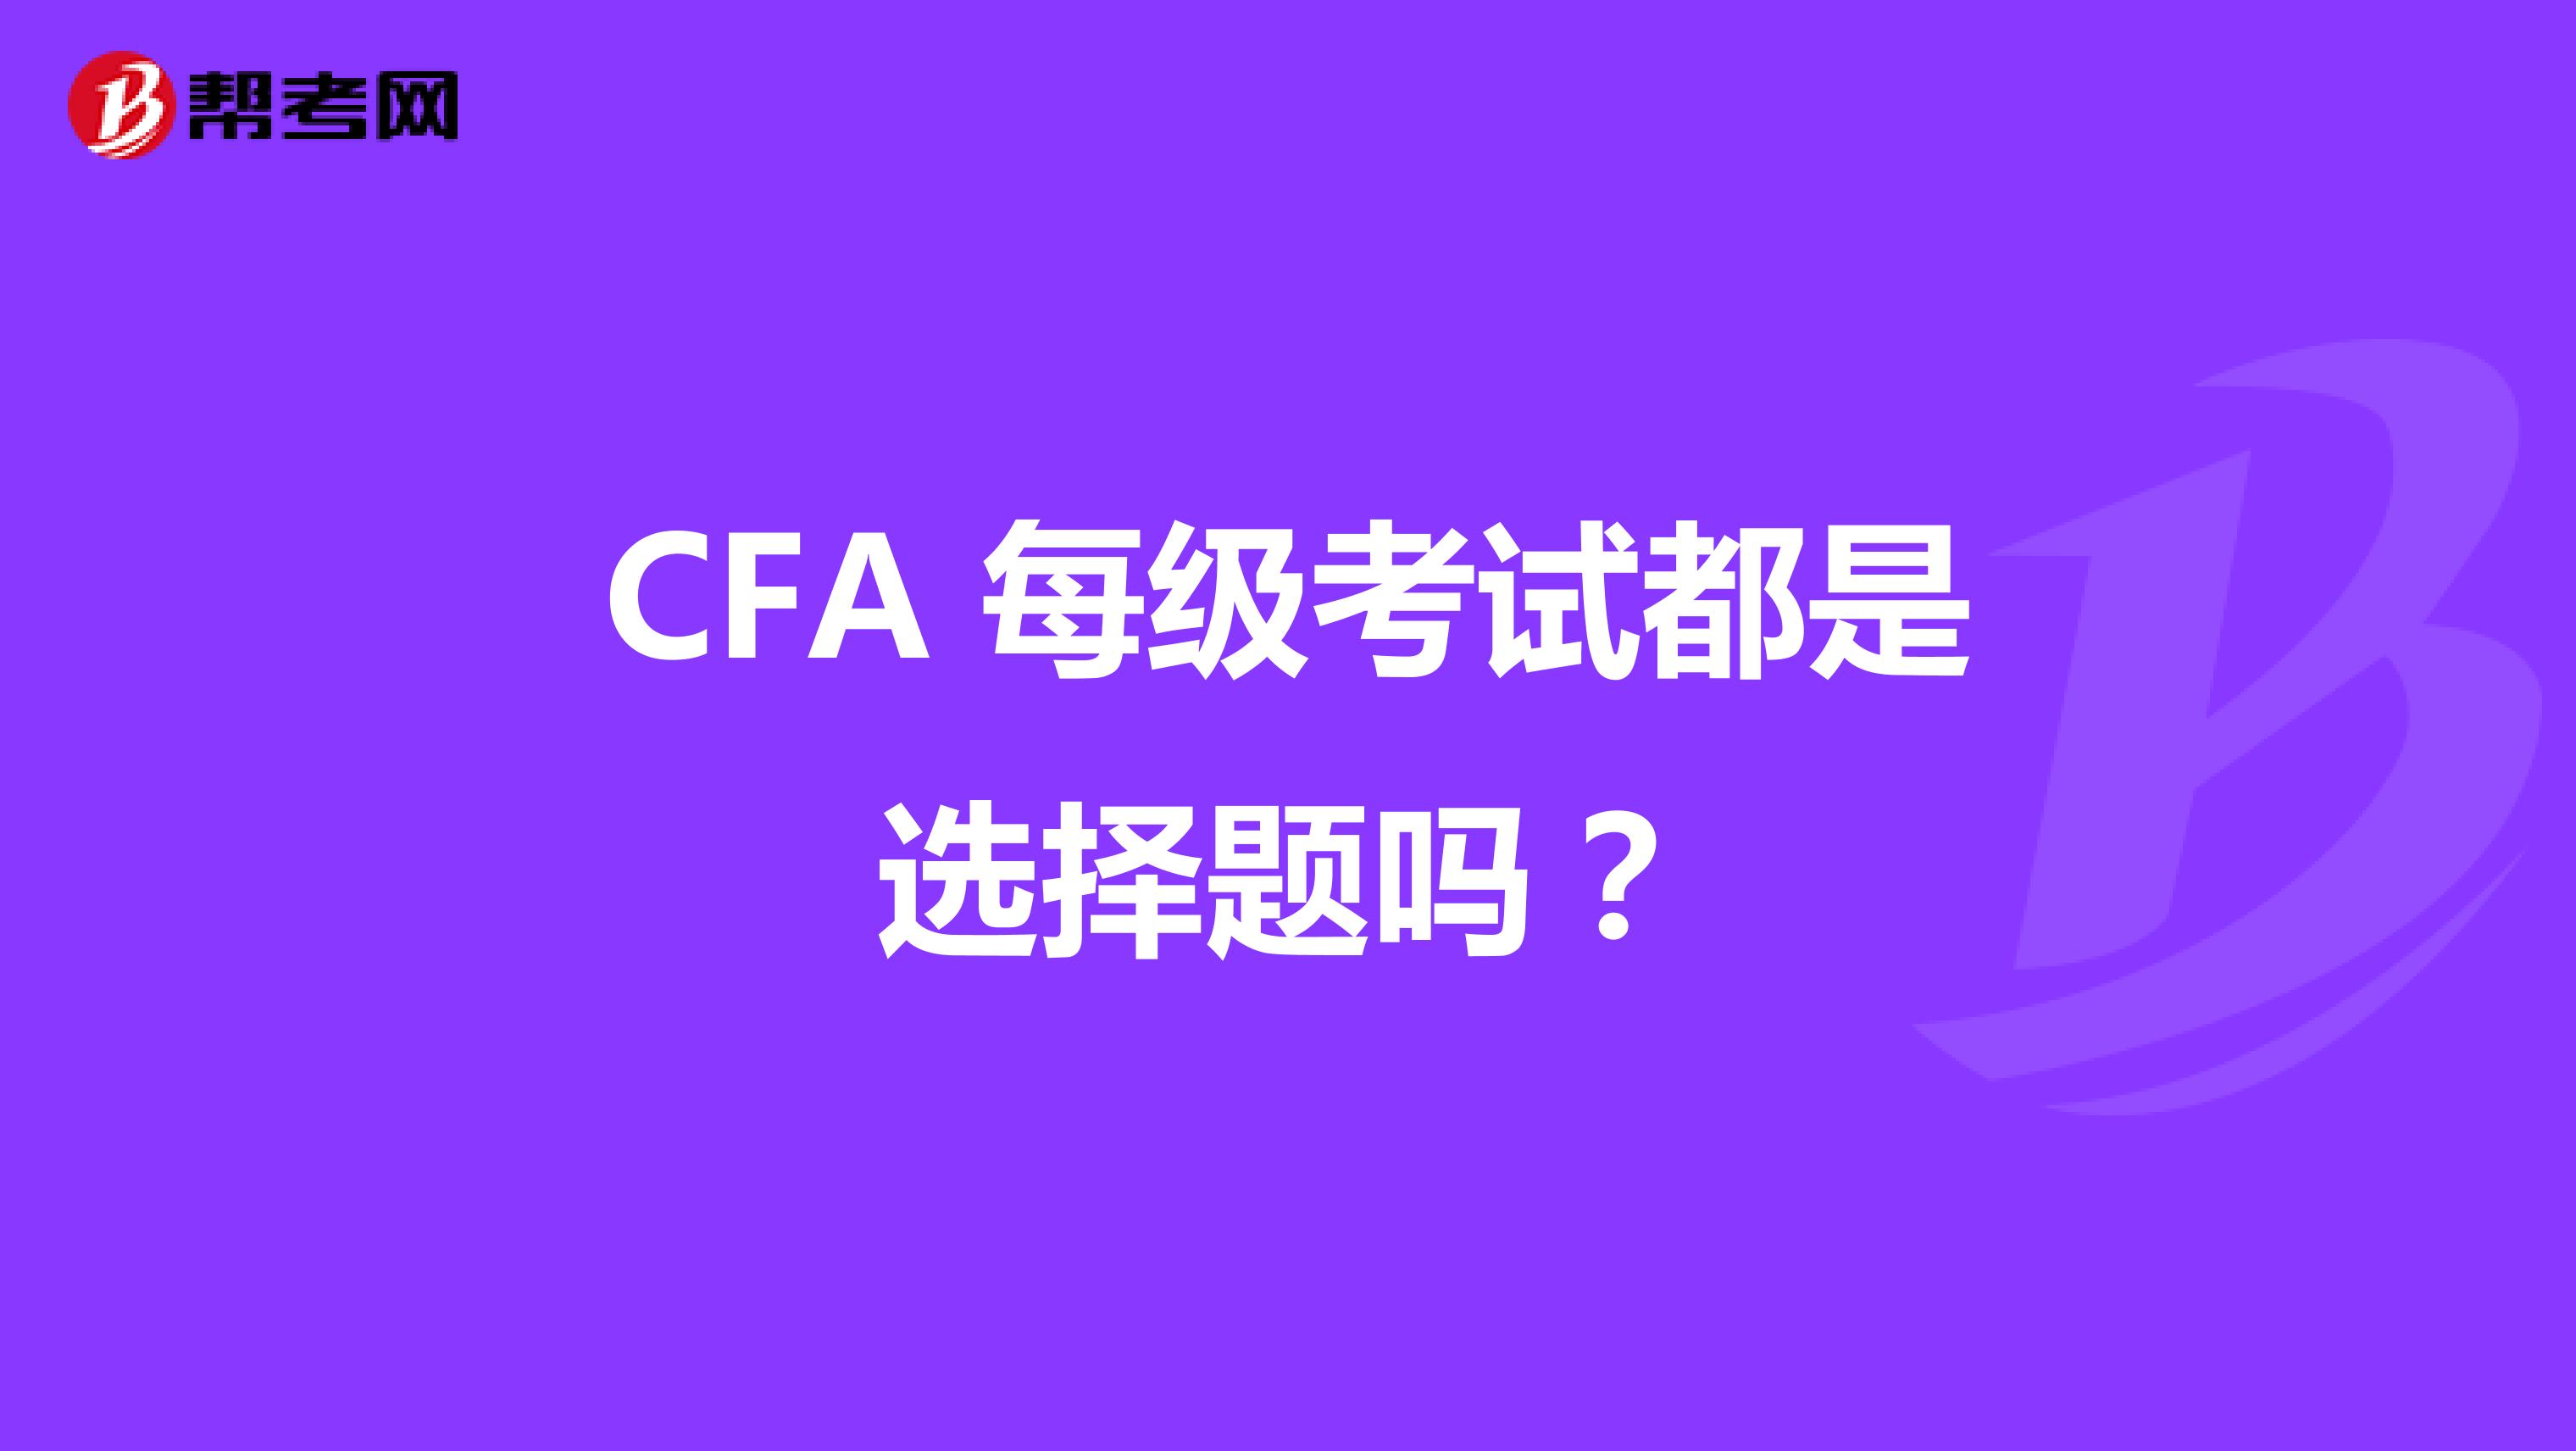 CFA 每级考试都是选择题吗？